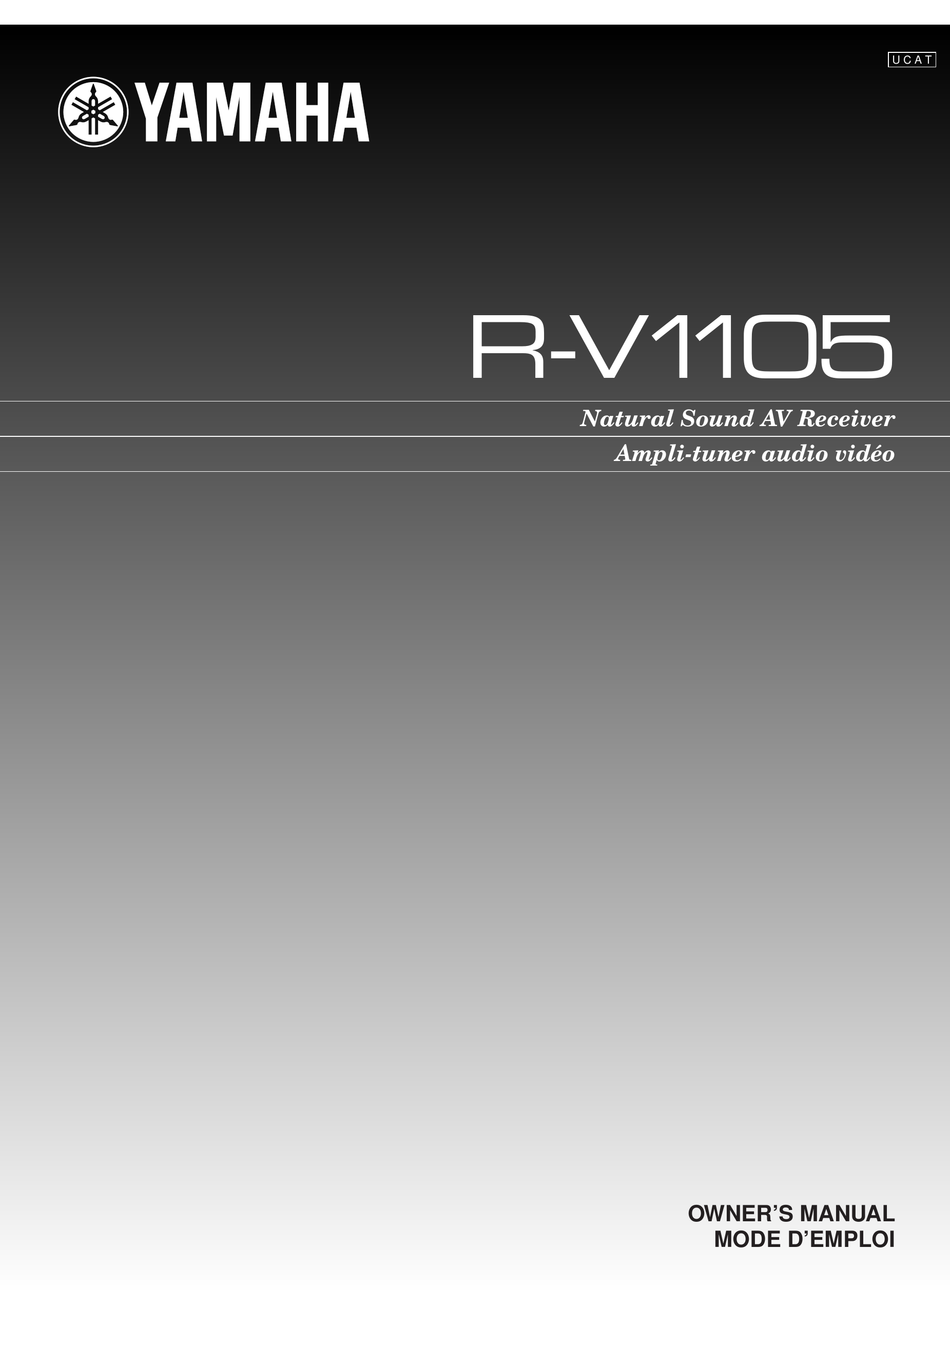 YAMAHA R-V1105 OWNER'S MANUAL Pdf Download | ManualsLib